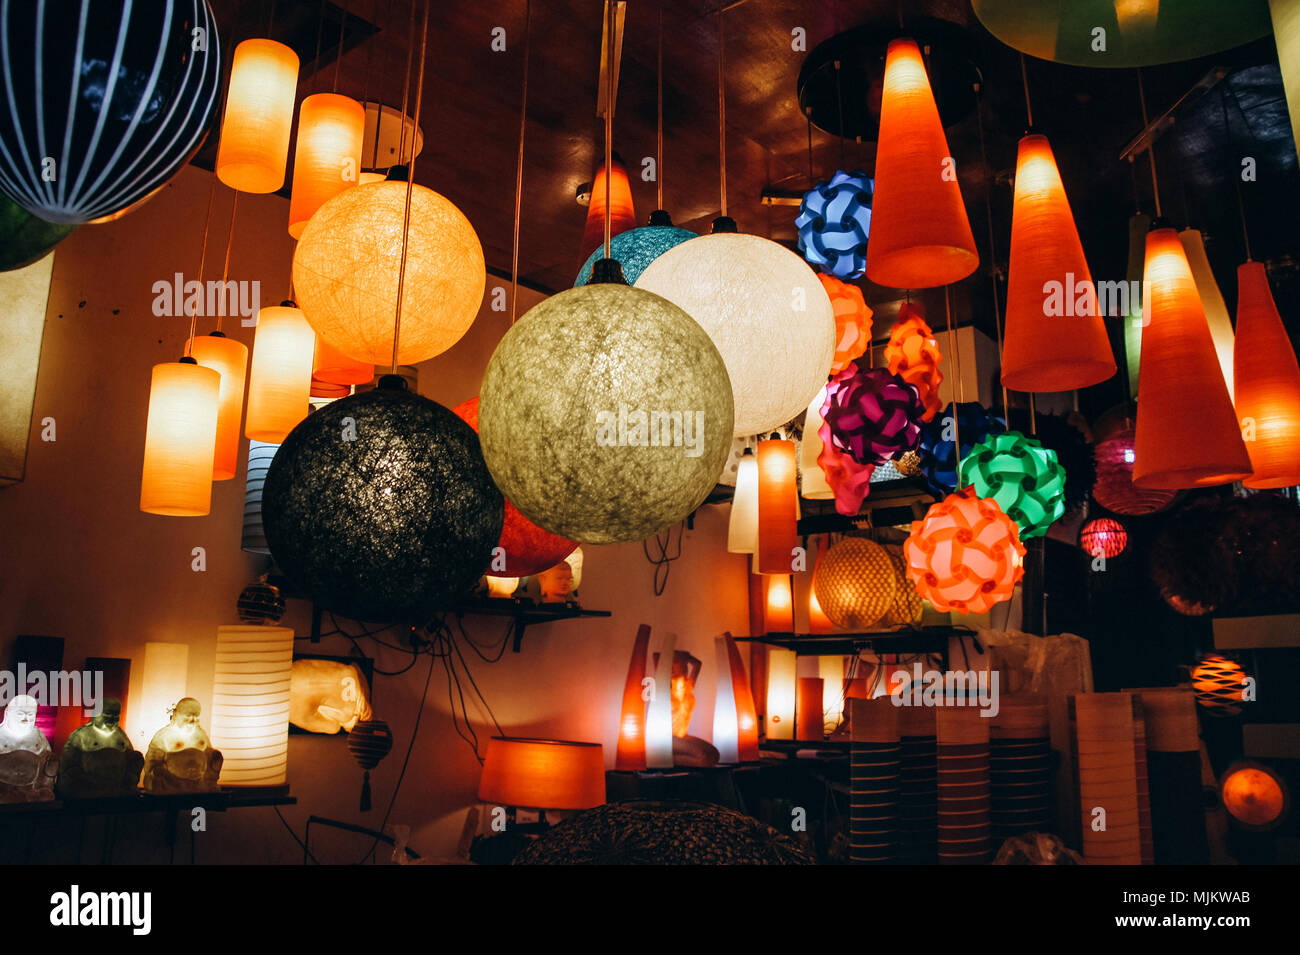 Lokale design farbiges Licht Lampen im shop Insel Bali Stockfotografie -  Alamy